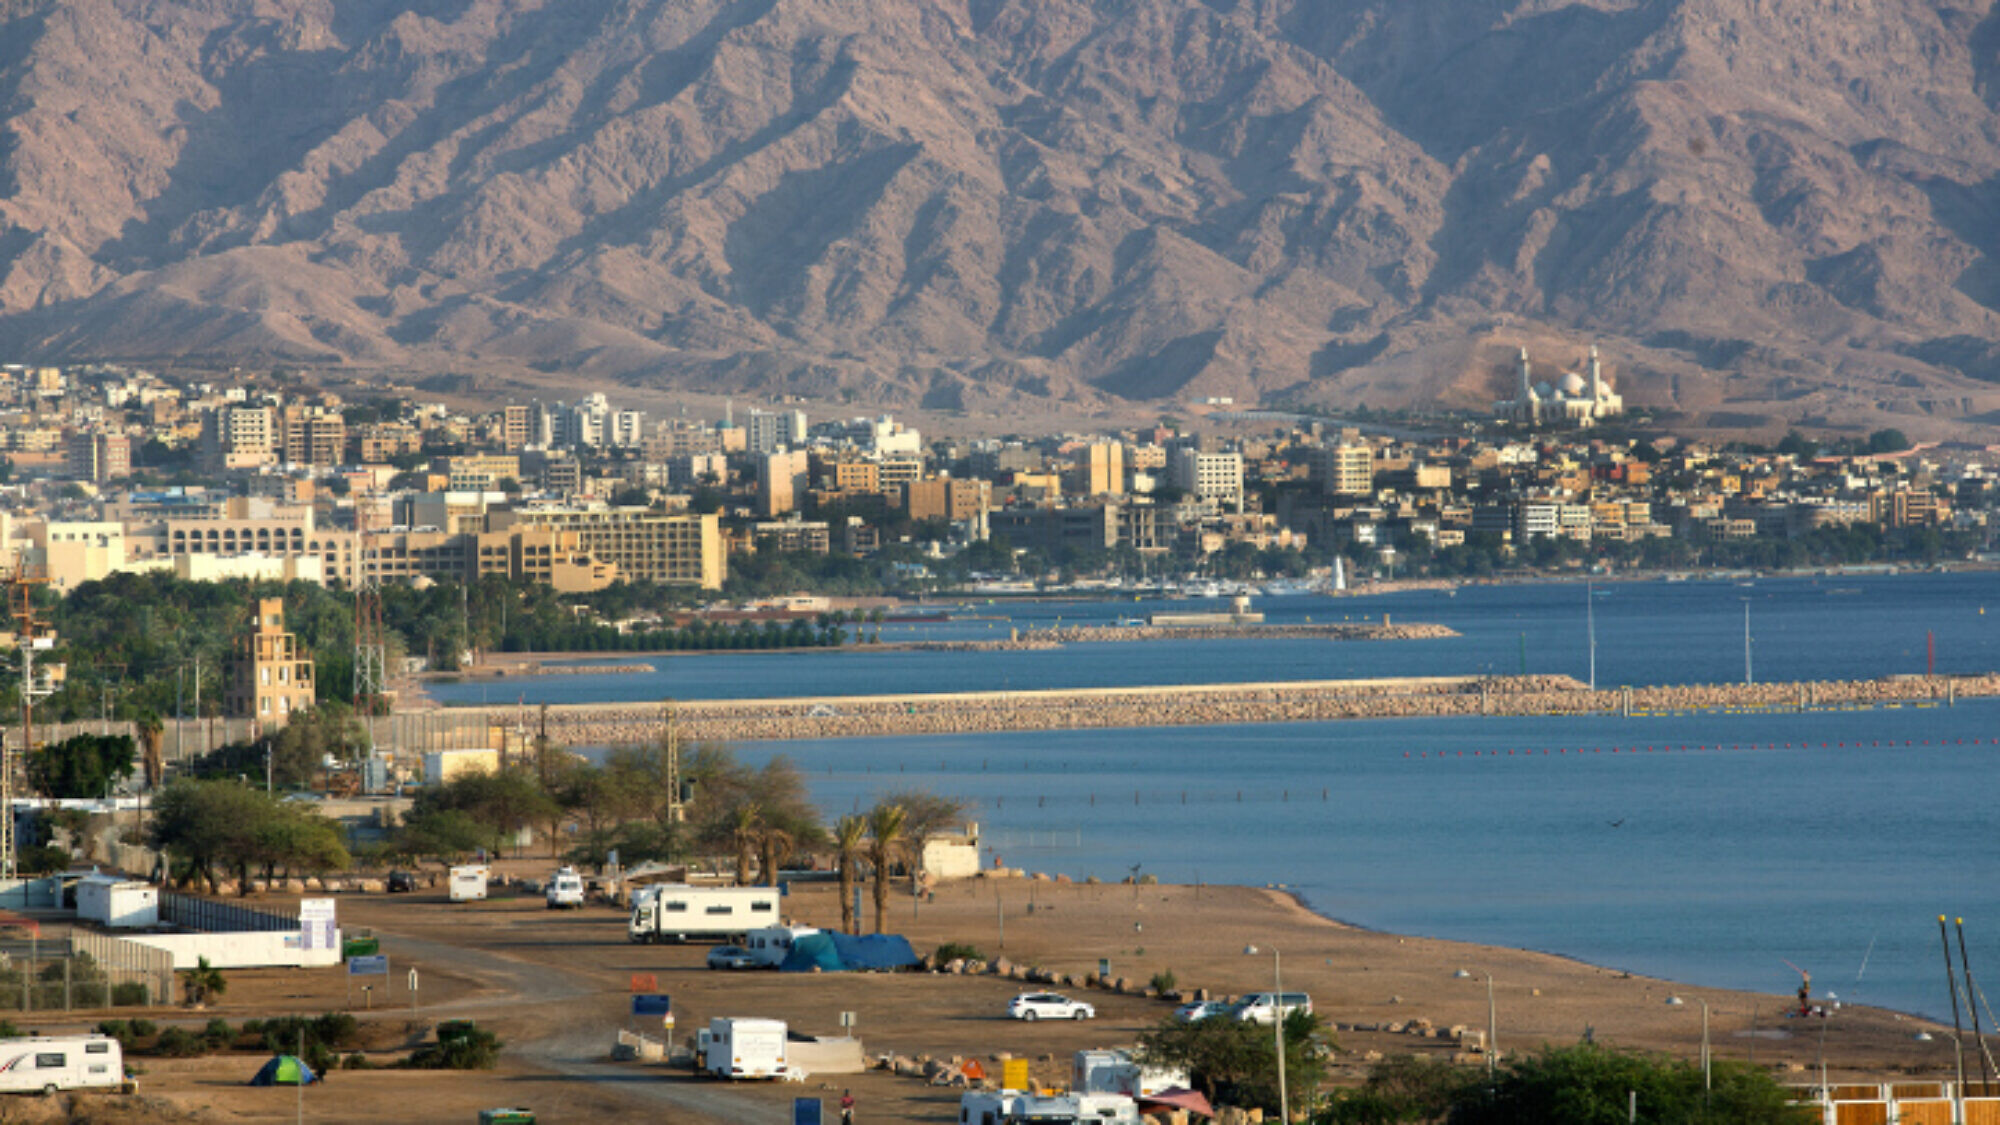 beaches closed after Jordanian swims border